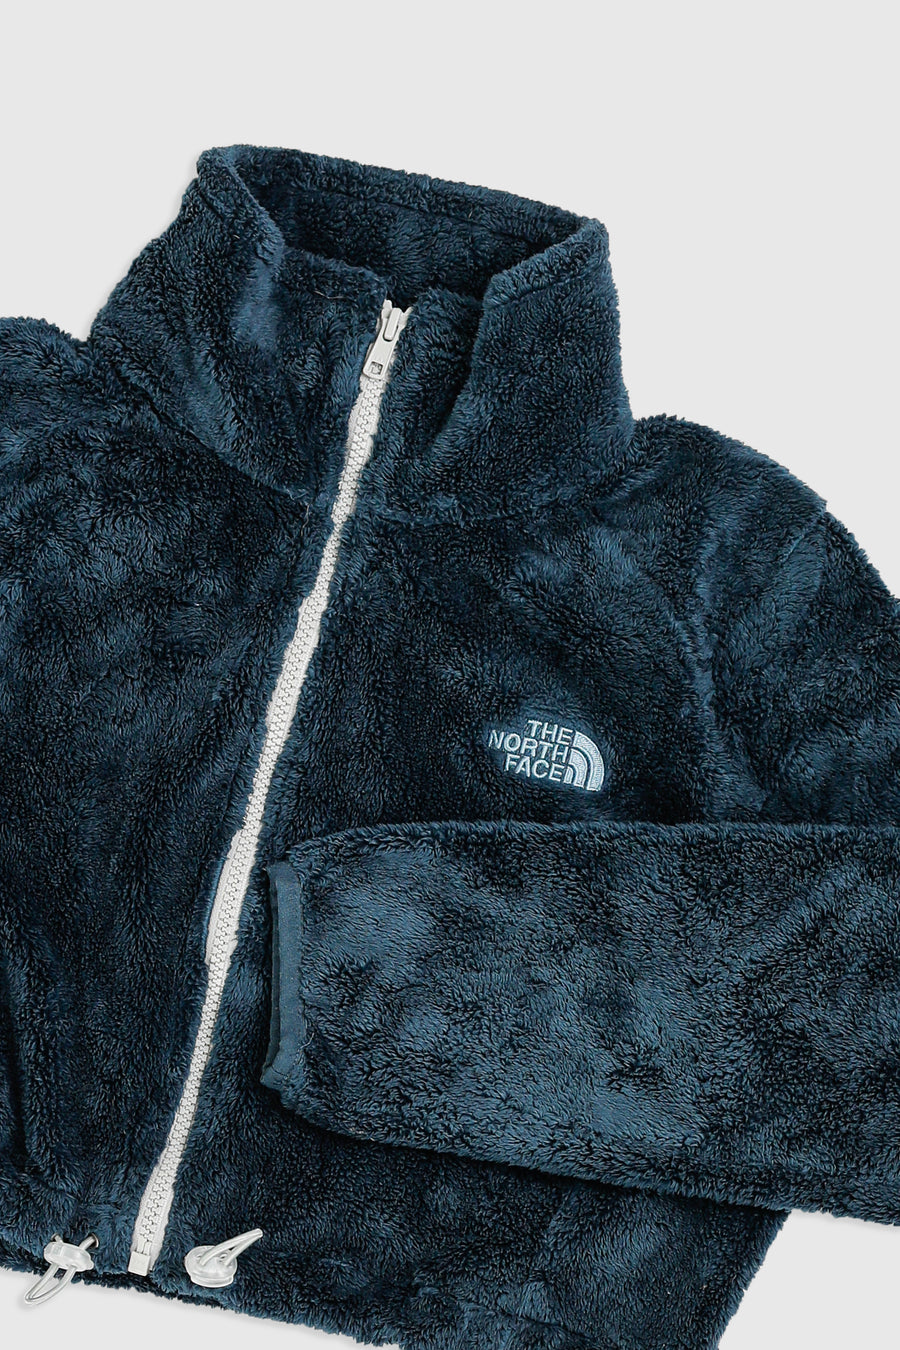 Rework North Face Crop Fleece Jacket - M